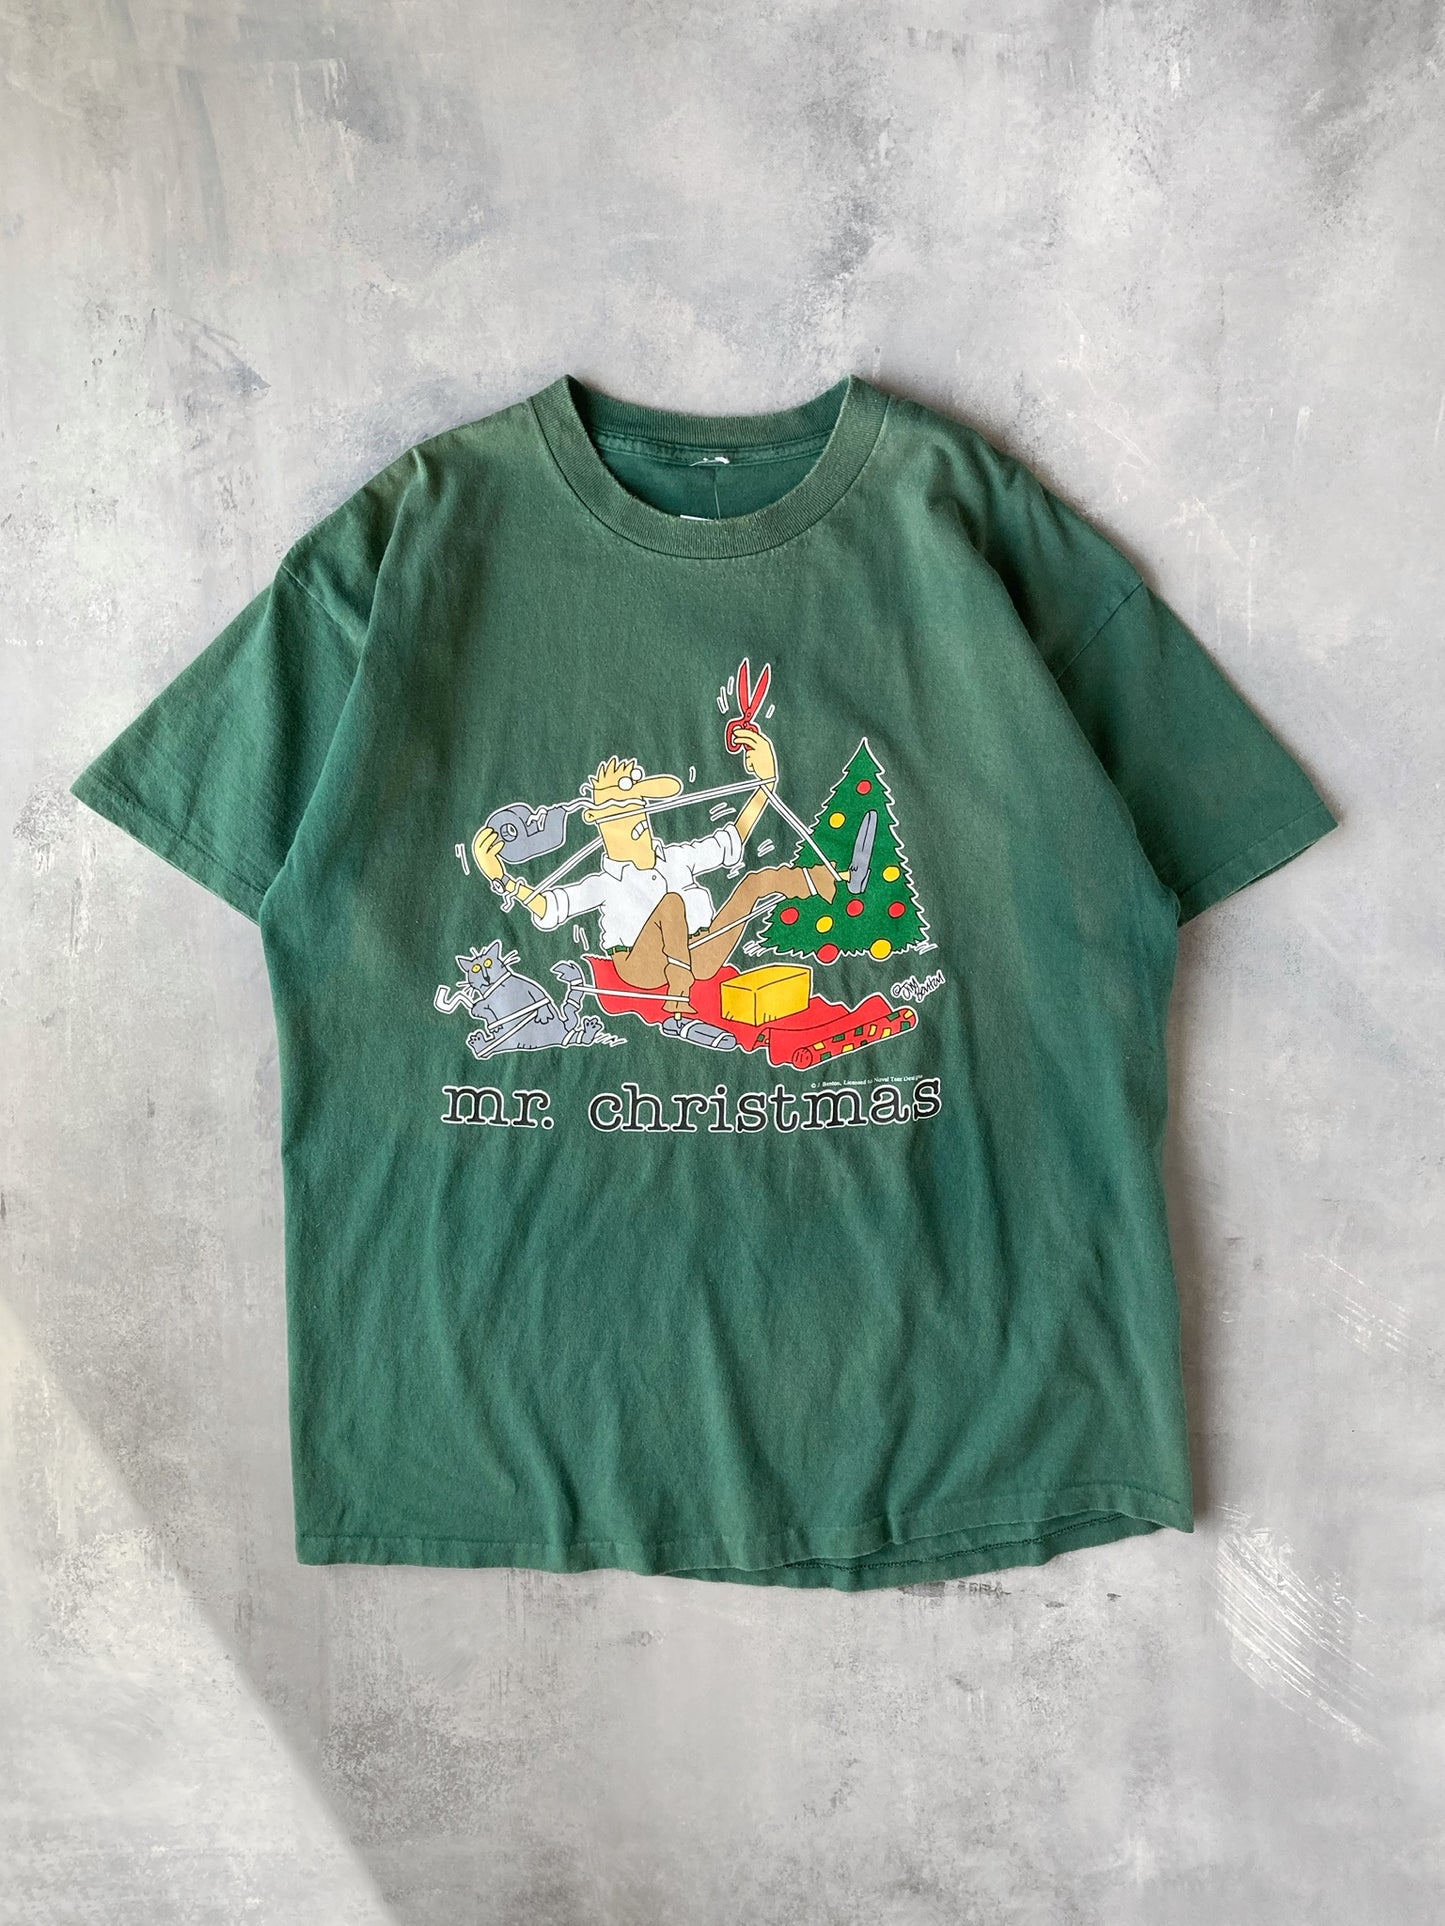 Mr. Christmas T-Shirt 90's - XL